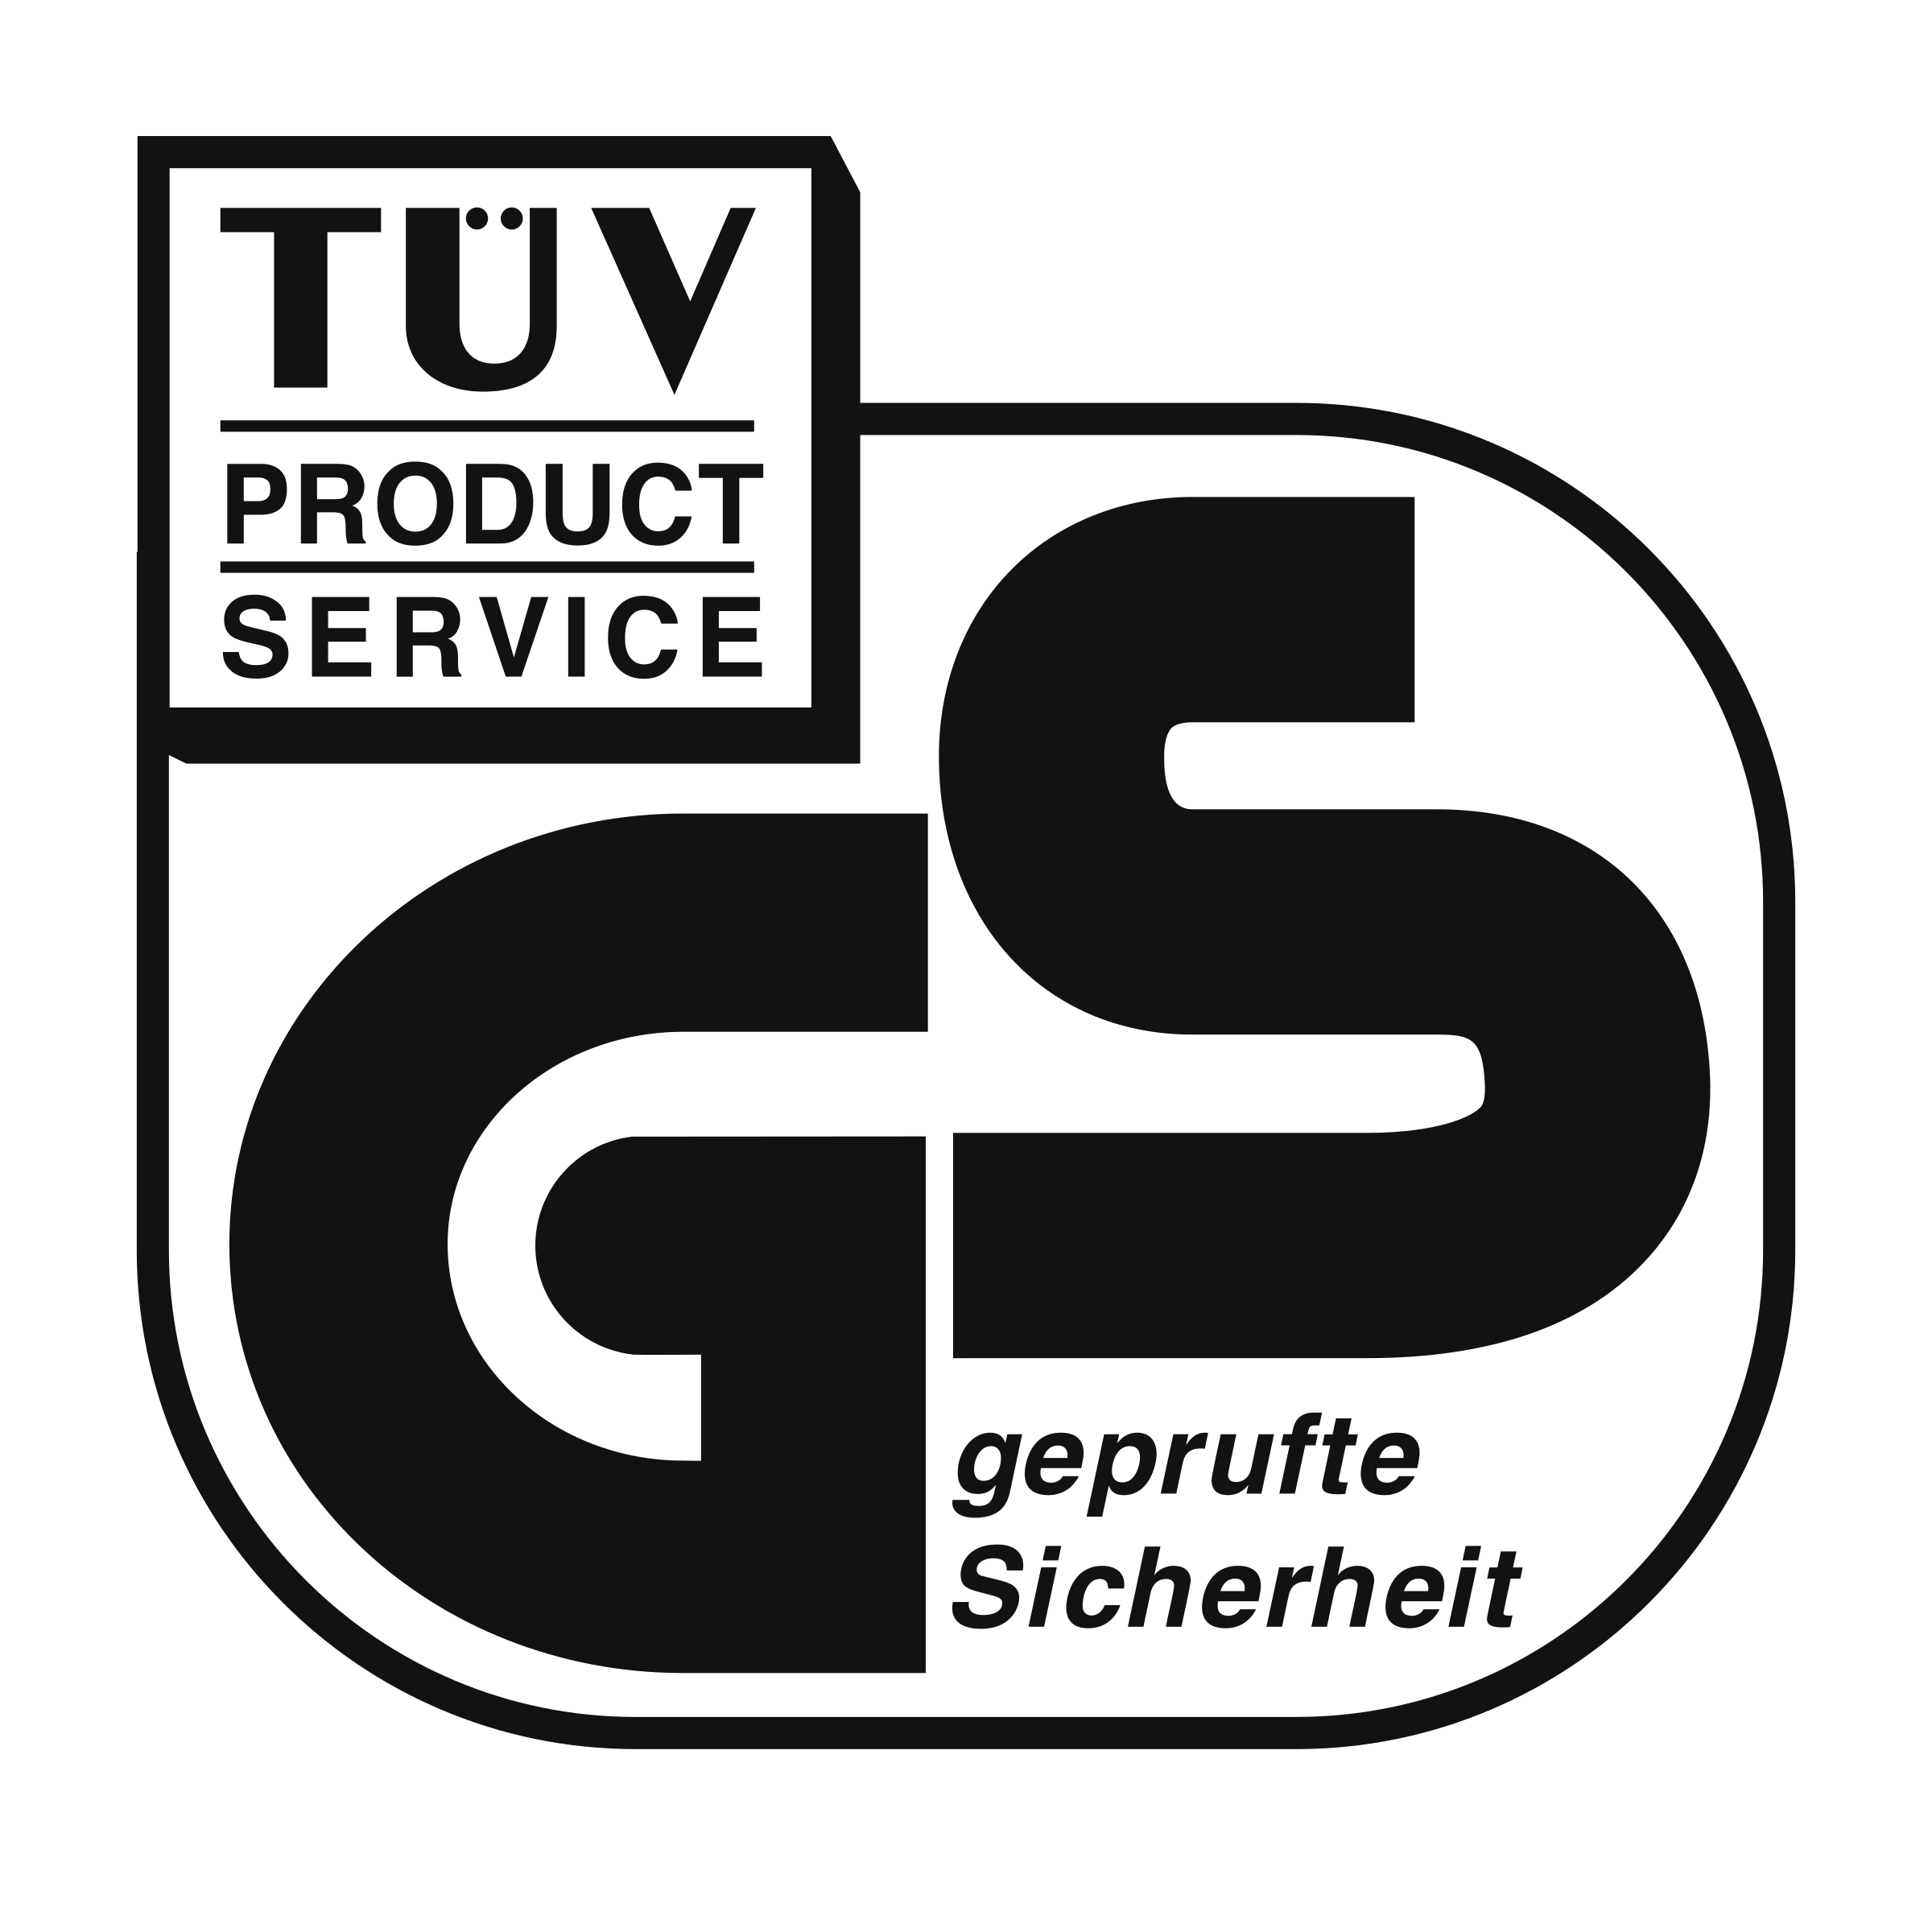 White G S Logo - TUV GS Logo PNG Transparent & SVG Vector - Freebie Supply